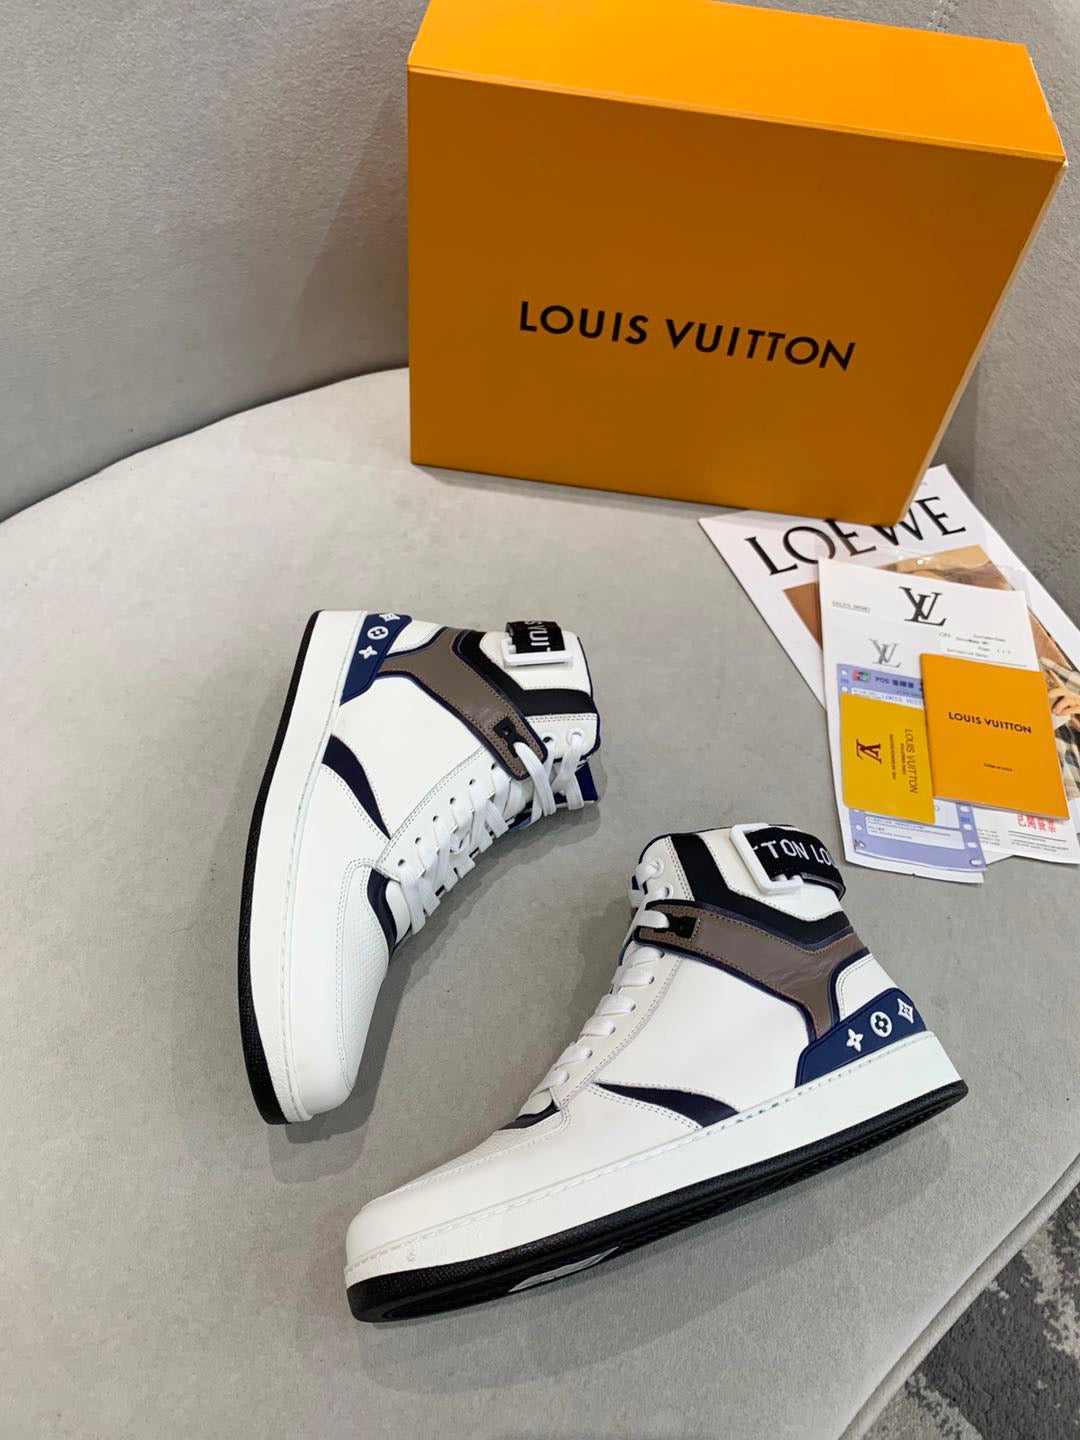 Louis Vuitton sneaker